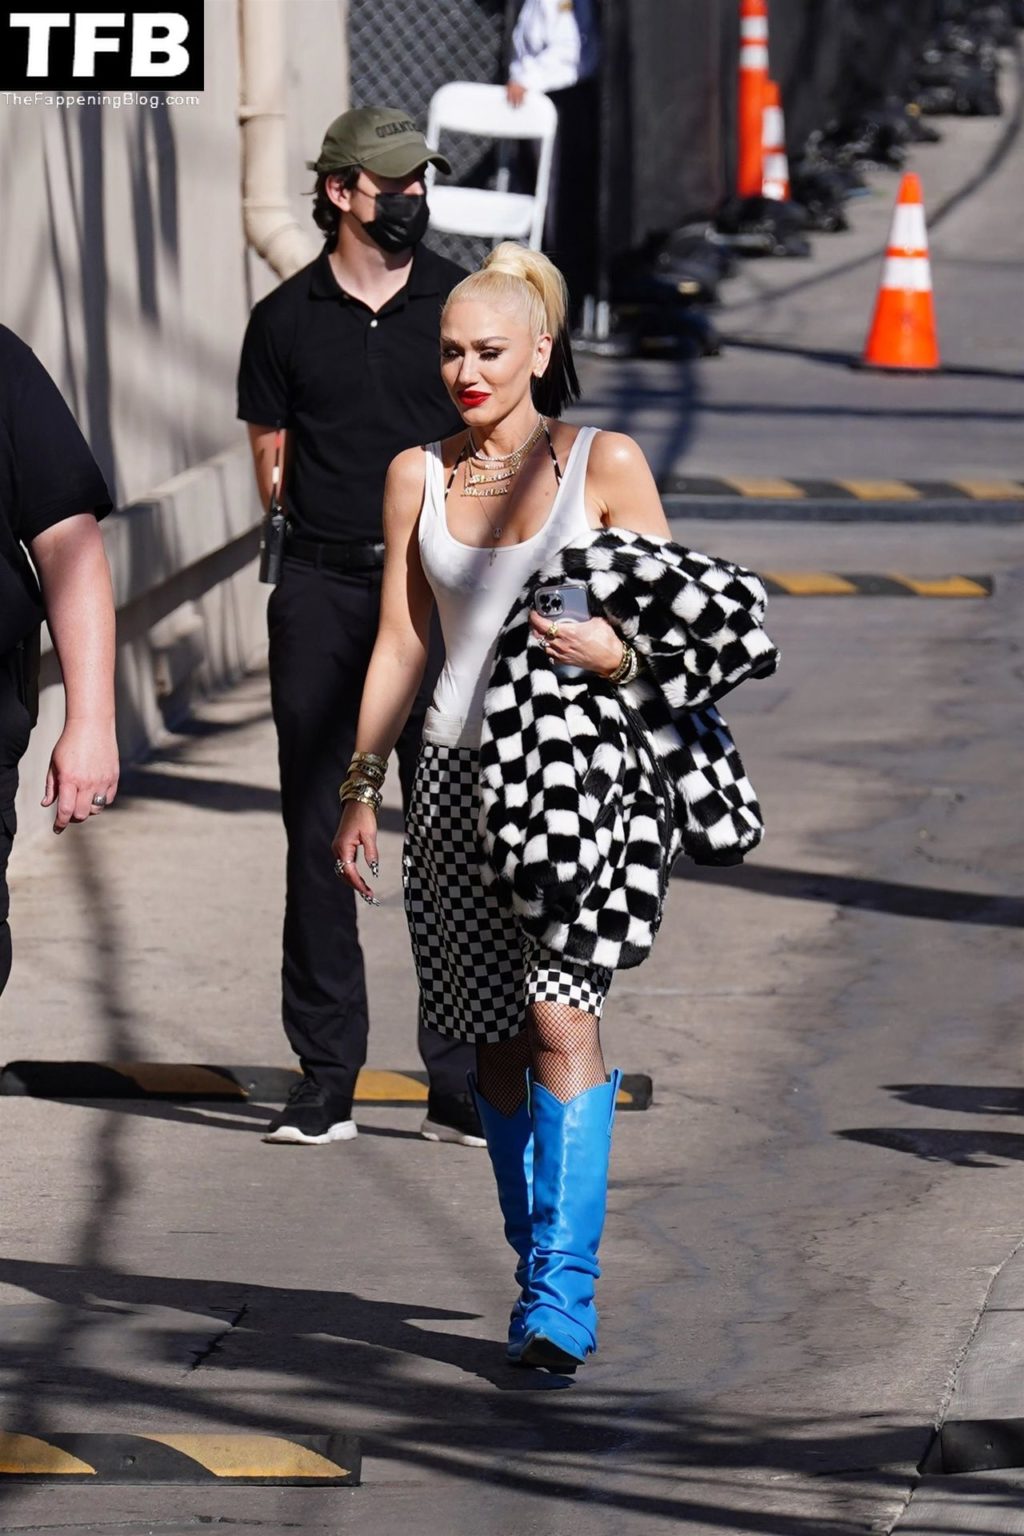 Gwen Stefani Arrives For an Appearance on Jimmy Kimmel Live! (87 Photos)